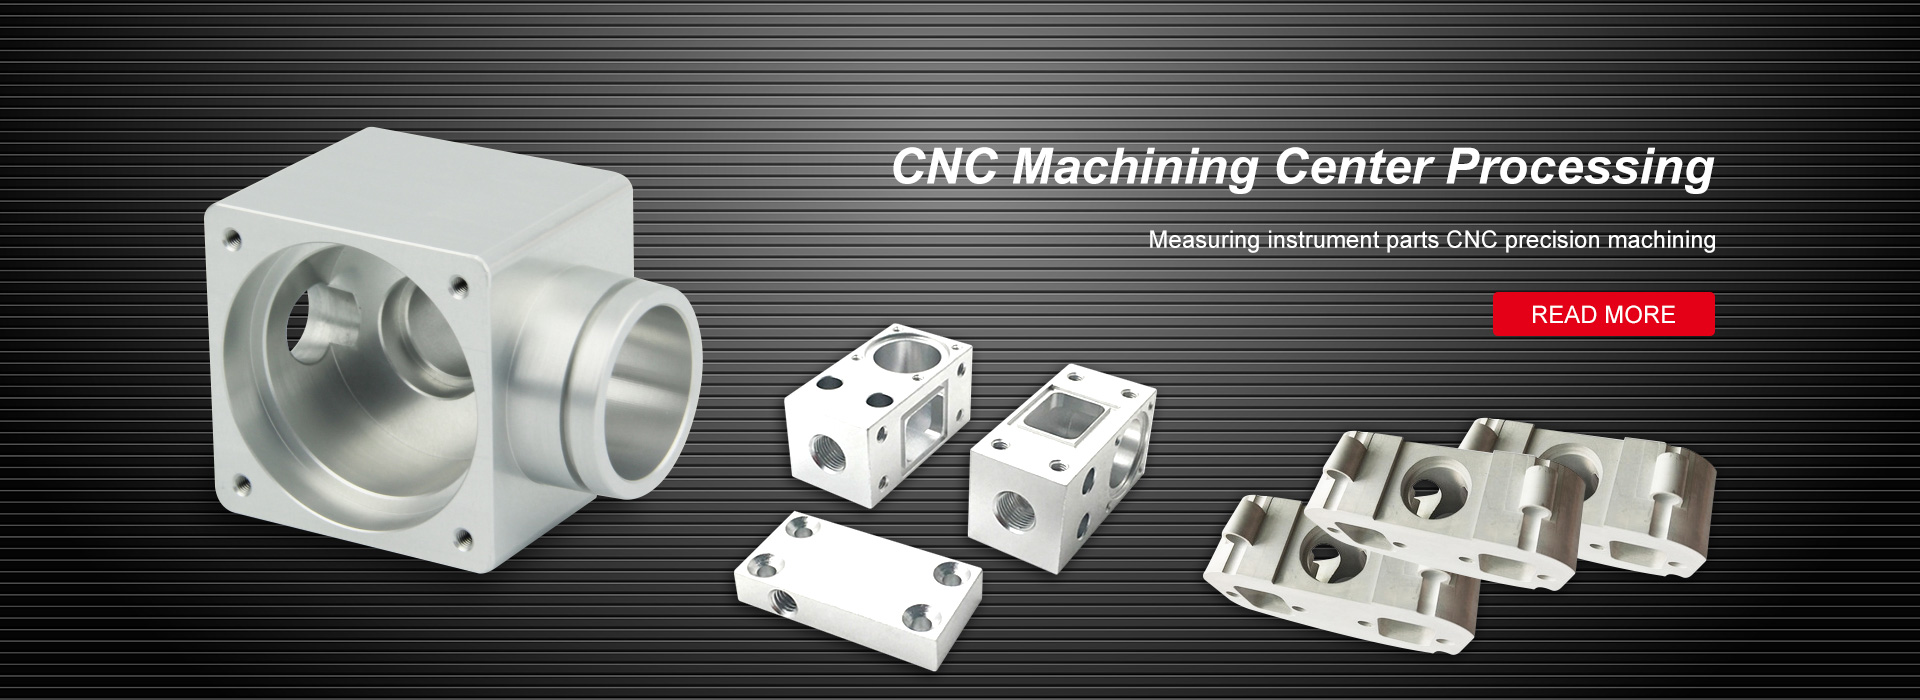 CNC Machining Center Processing